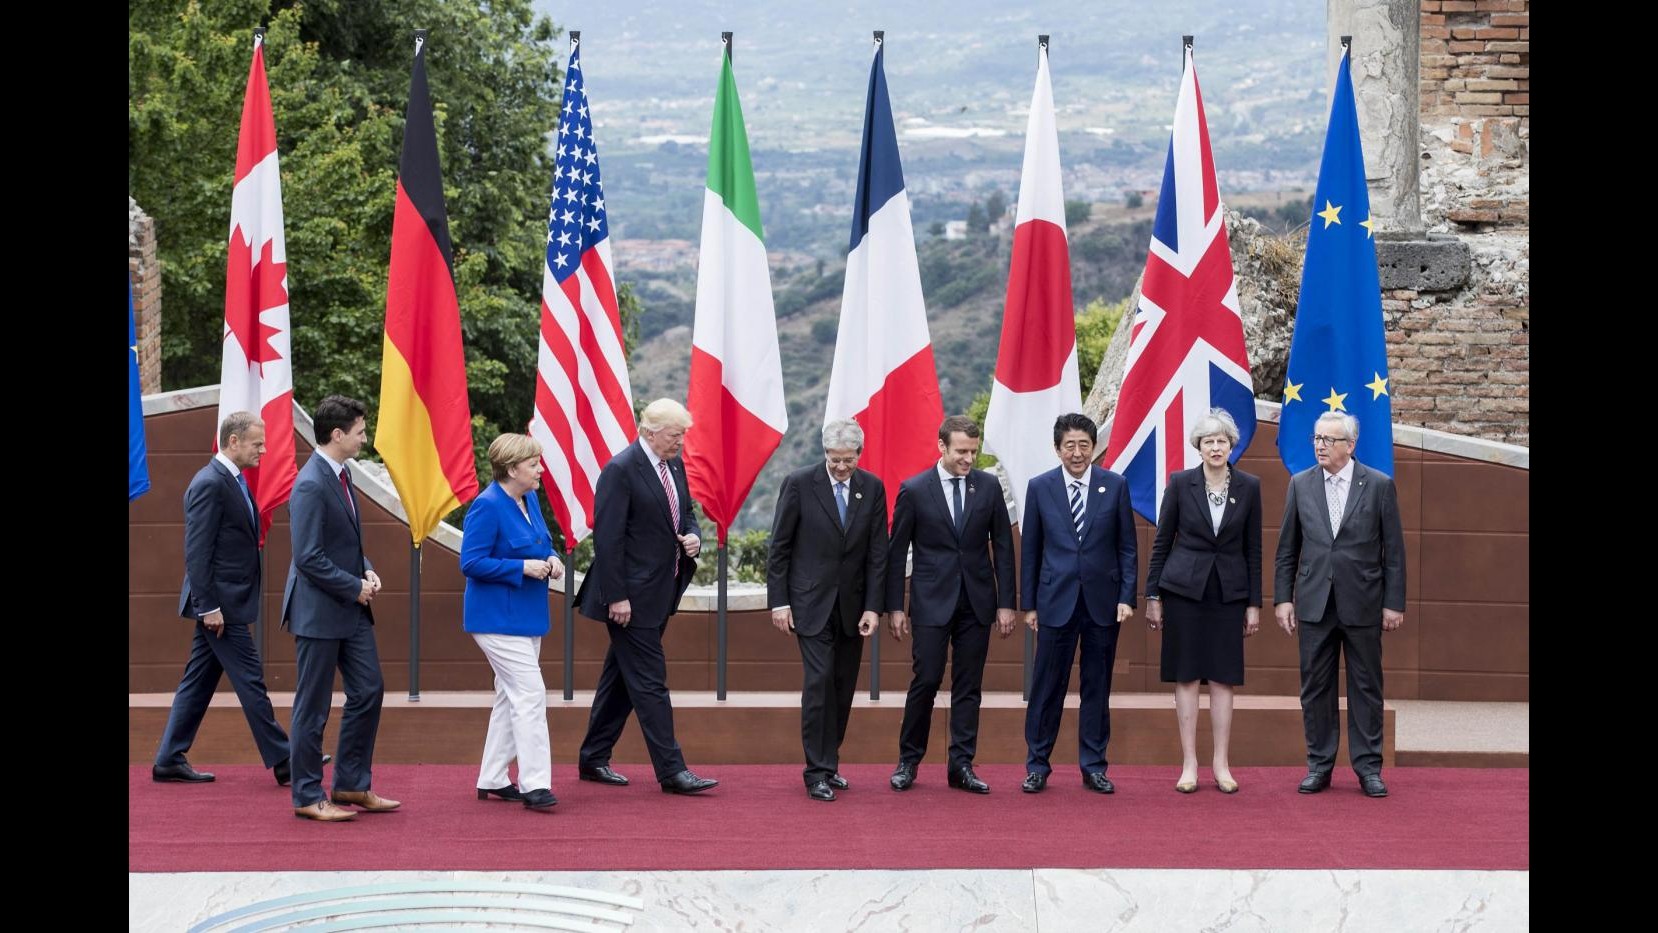 FOTO Al via i G7 i leader in gruppo al summit di Taormina